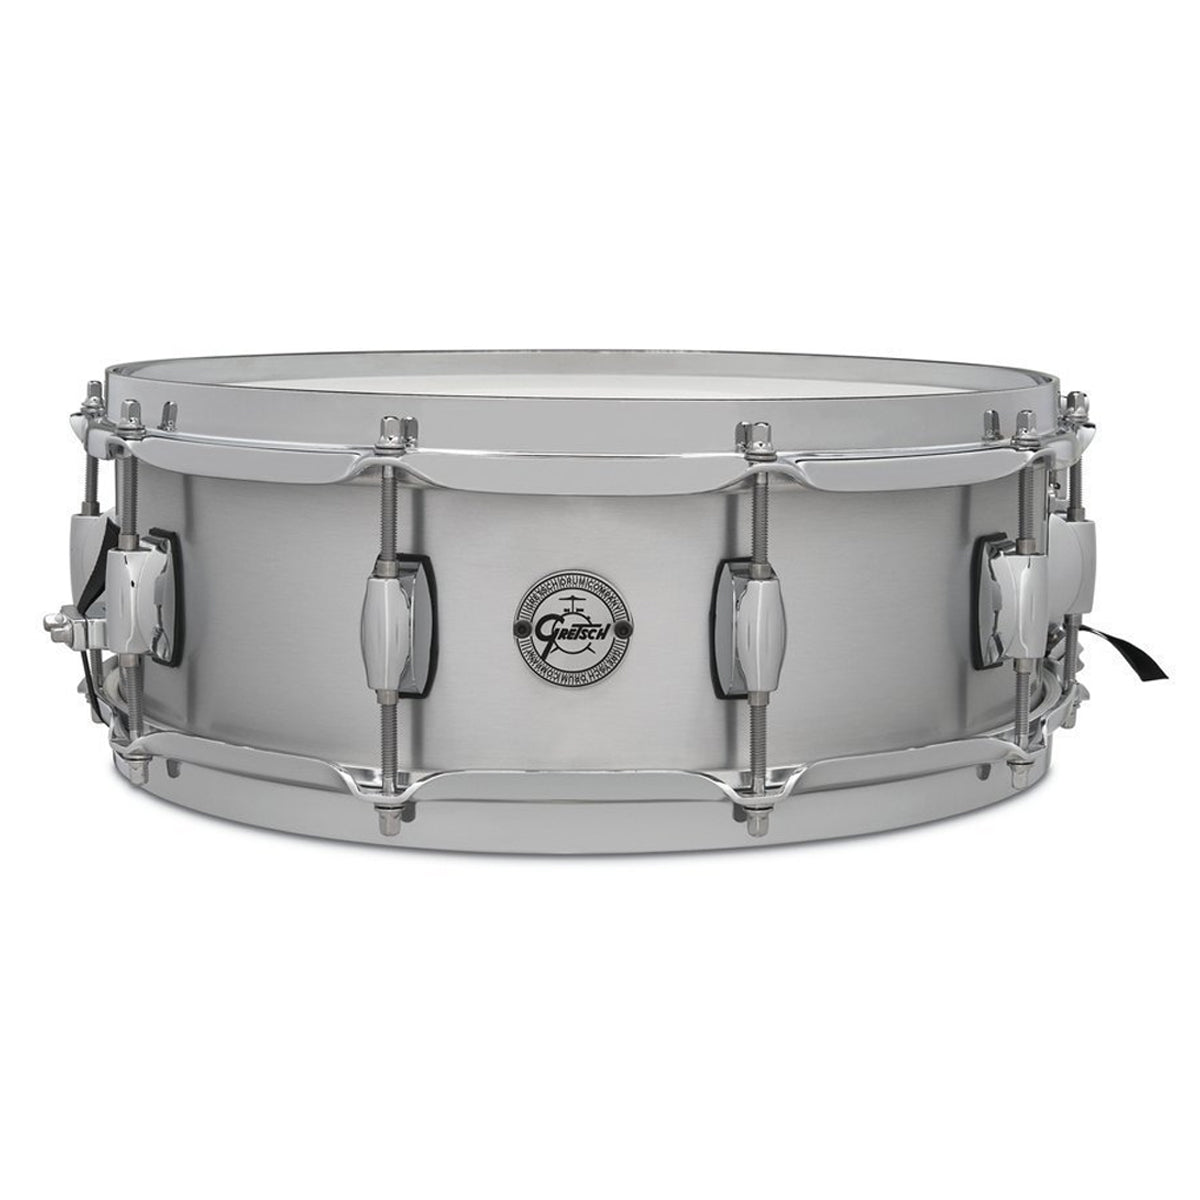 Gretsch "Full Range" 14"x5" Aluminum Snare Drum 'Grand Prix'